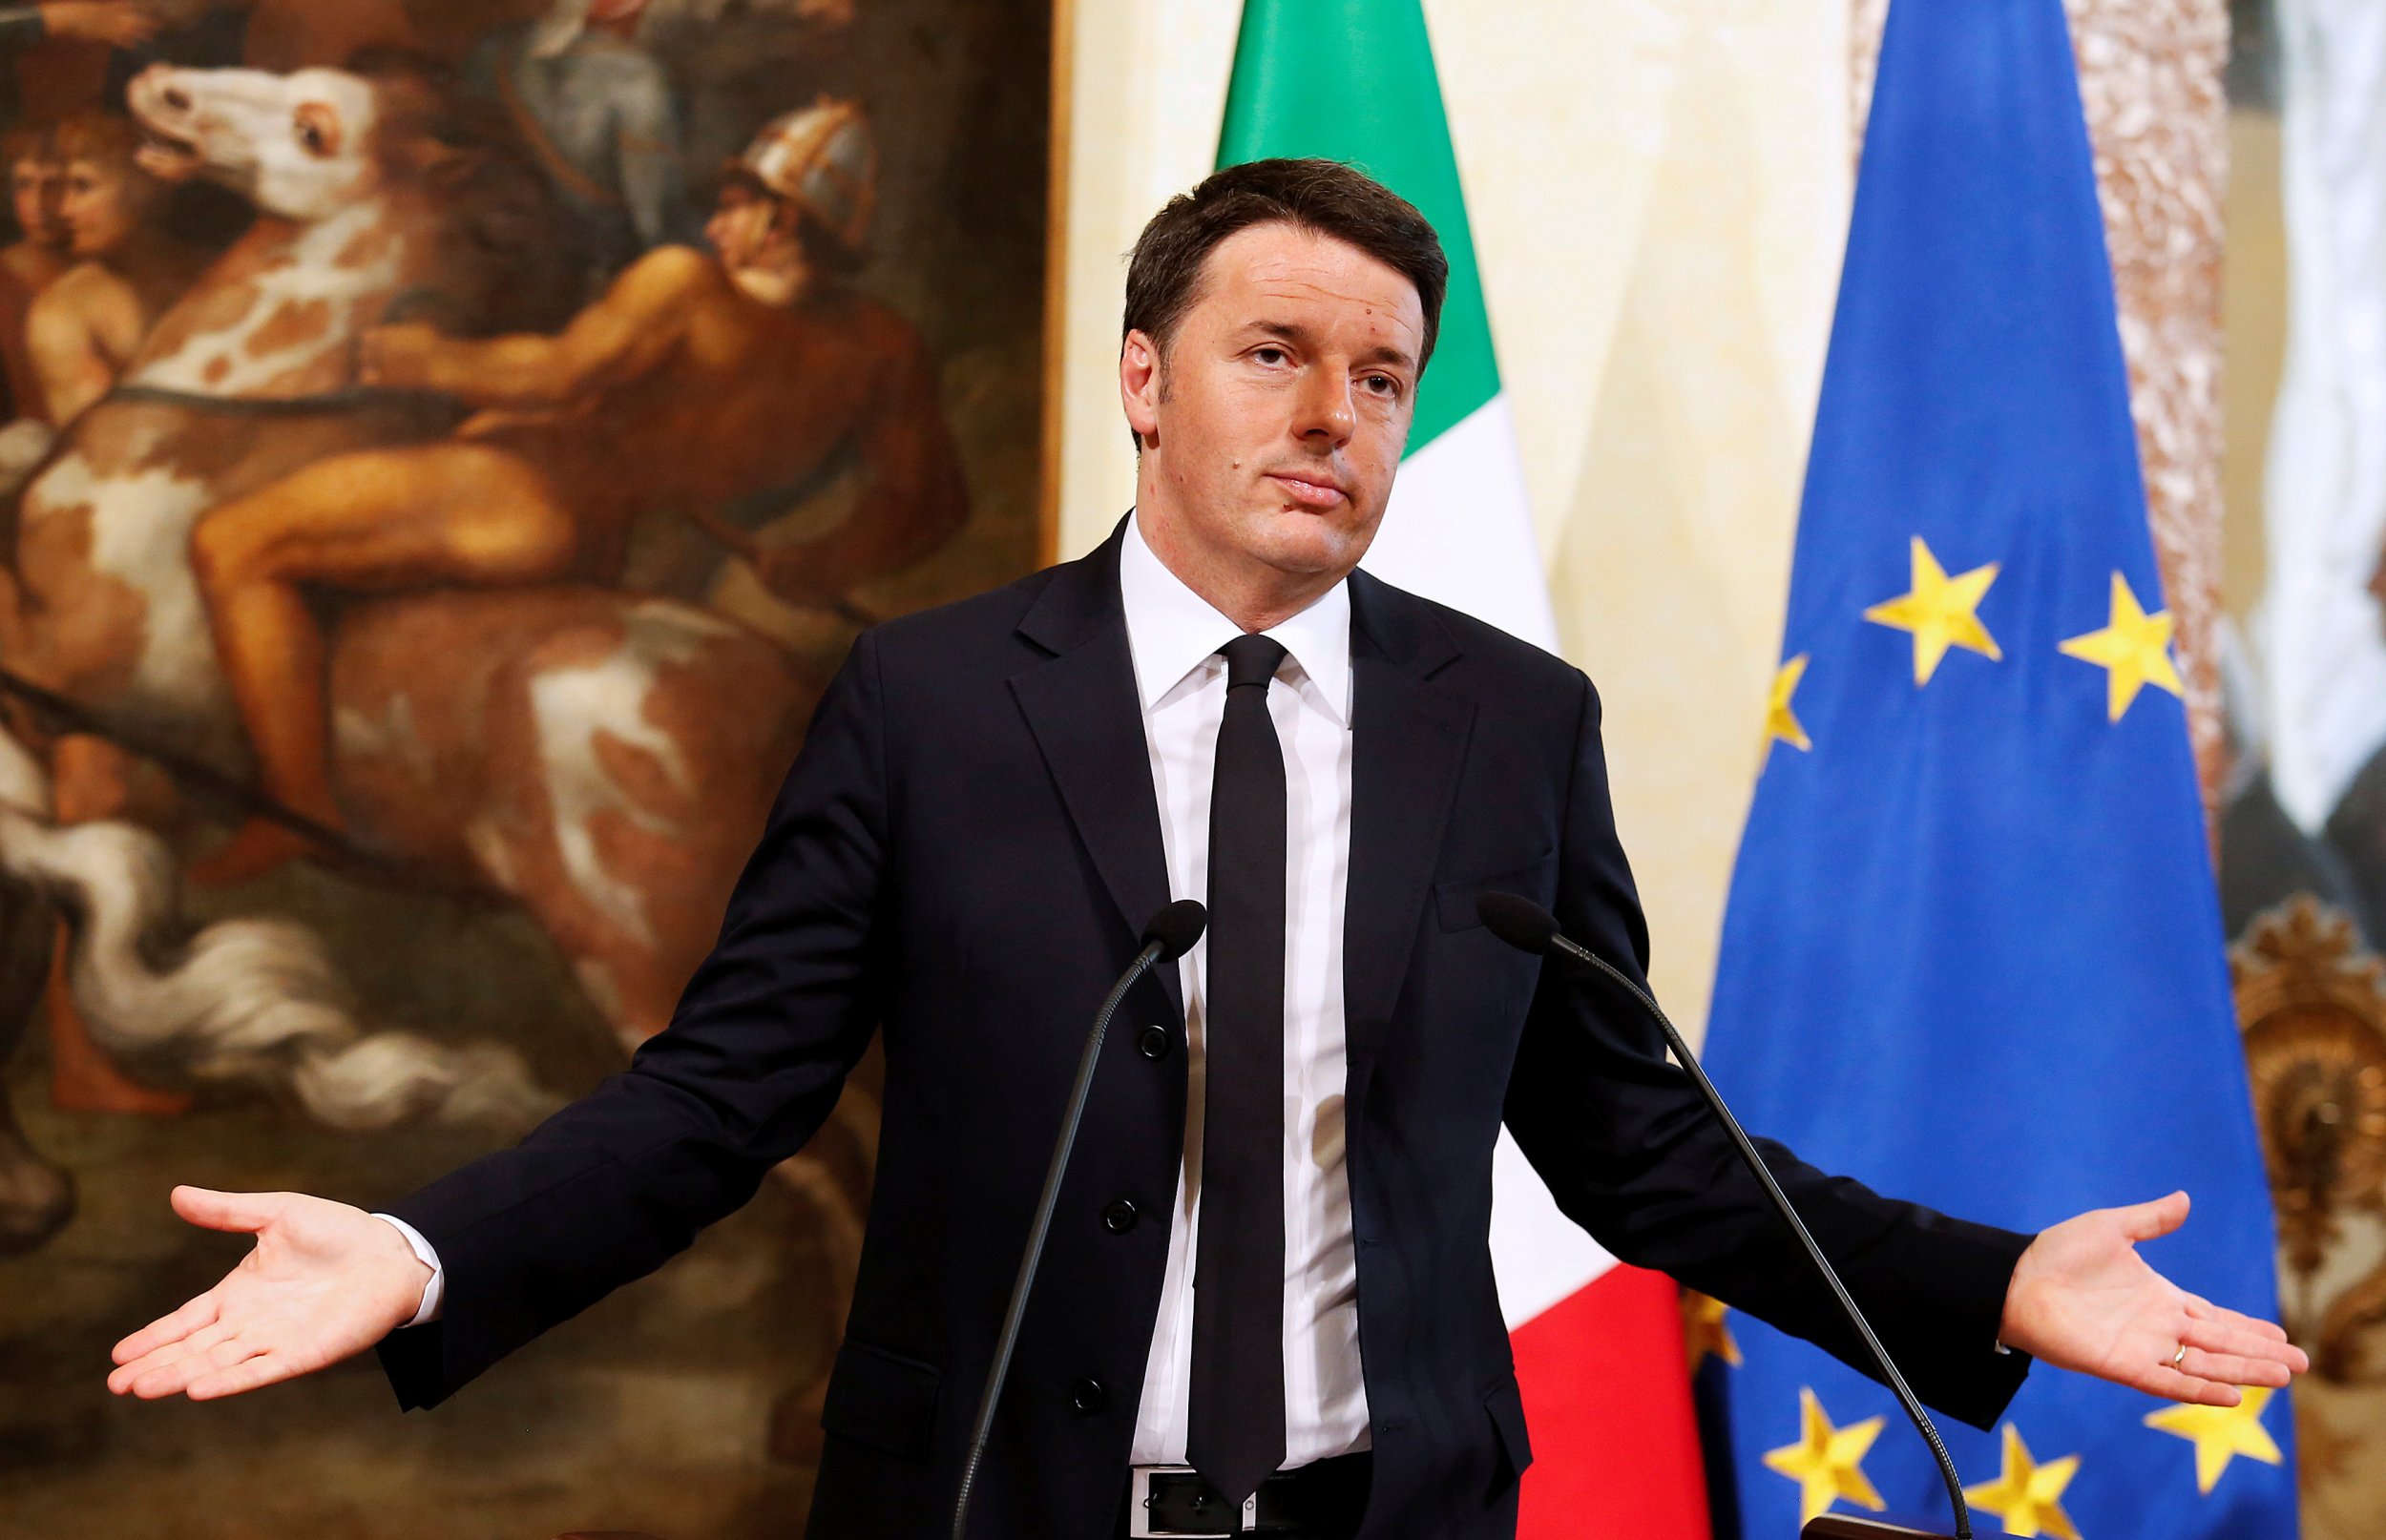 Italy's Prime Minister Matteo Renzi